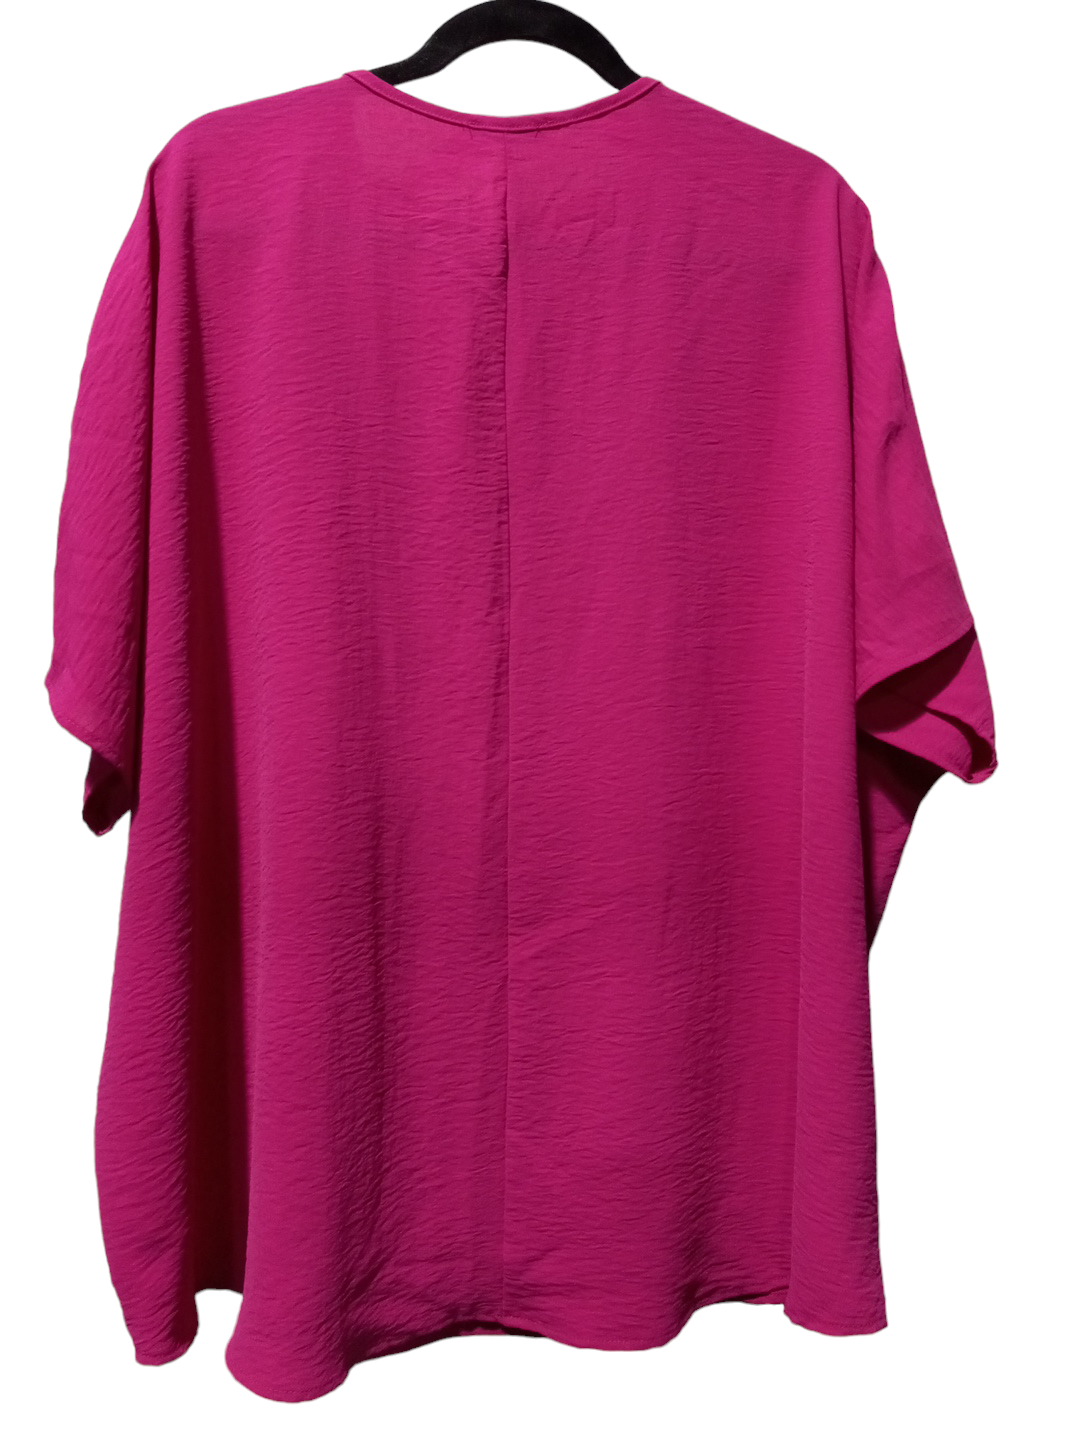 Pink Blouse Short Sleeve Jodifl, Size 1x